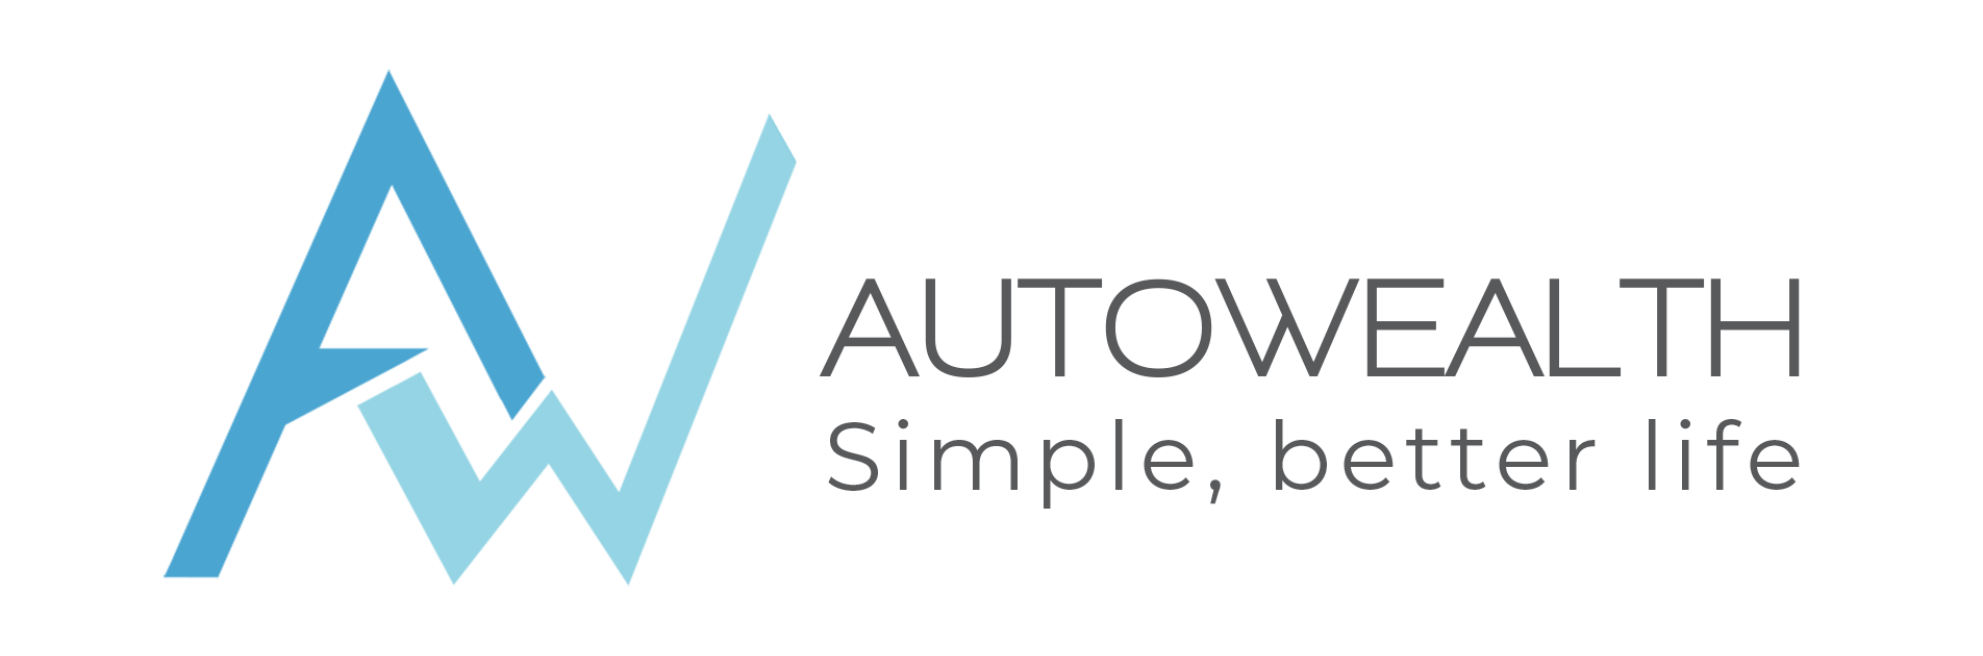 Autowealth logo